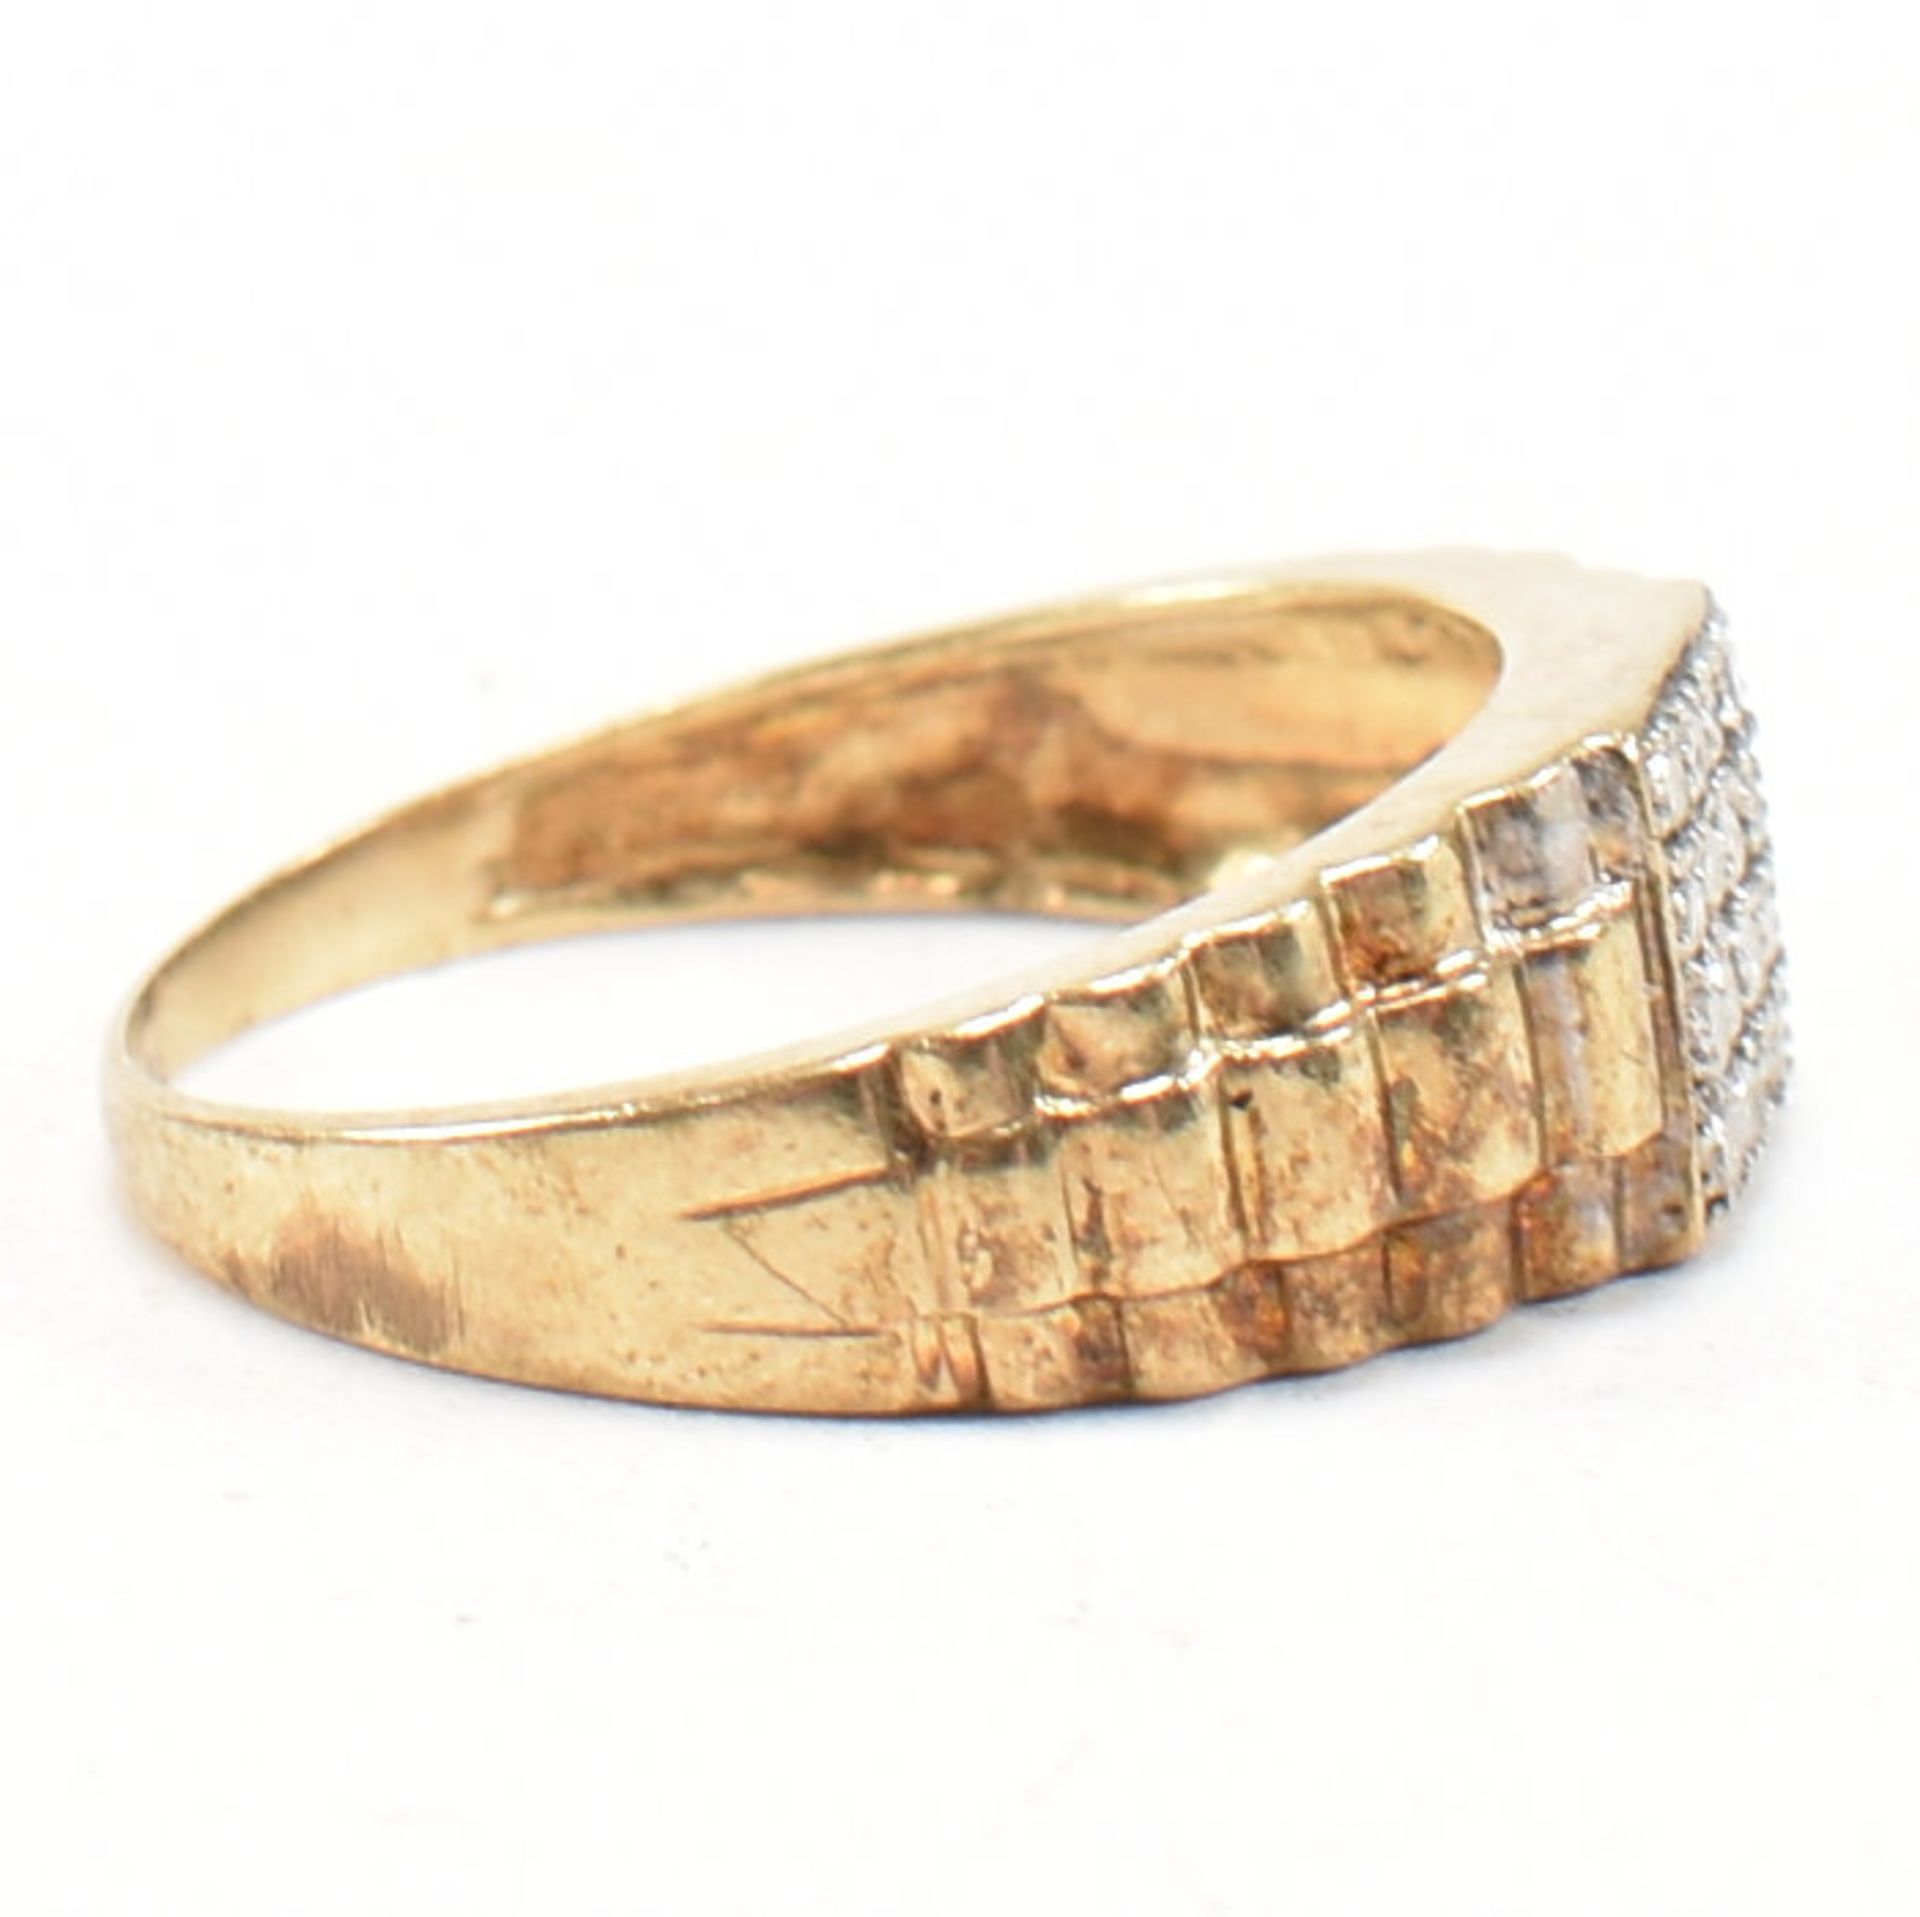 HALLMARKED 9CT GOLD & DIAMOND SIGNET RING - Image 2 of 9